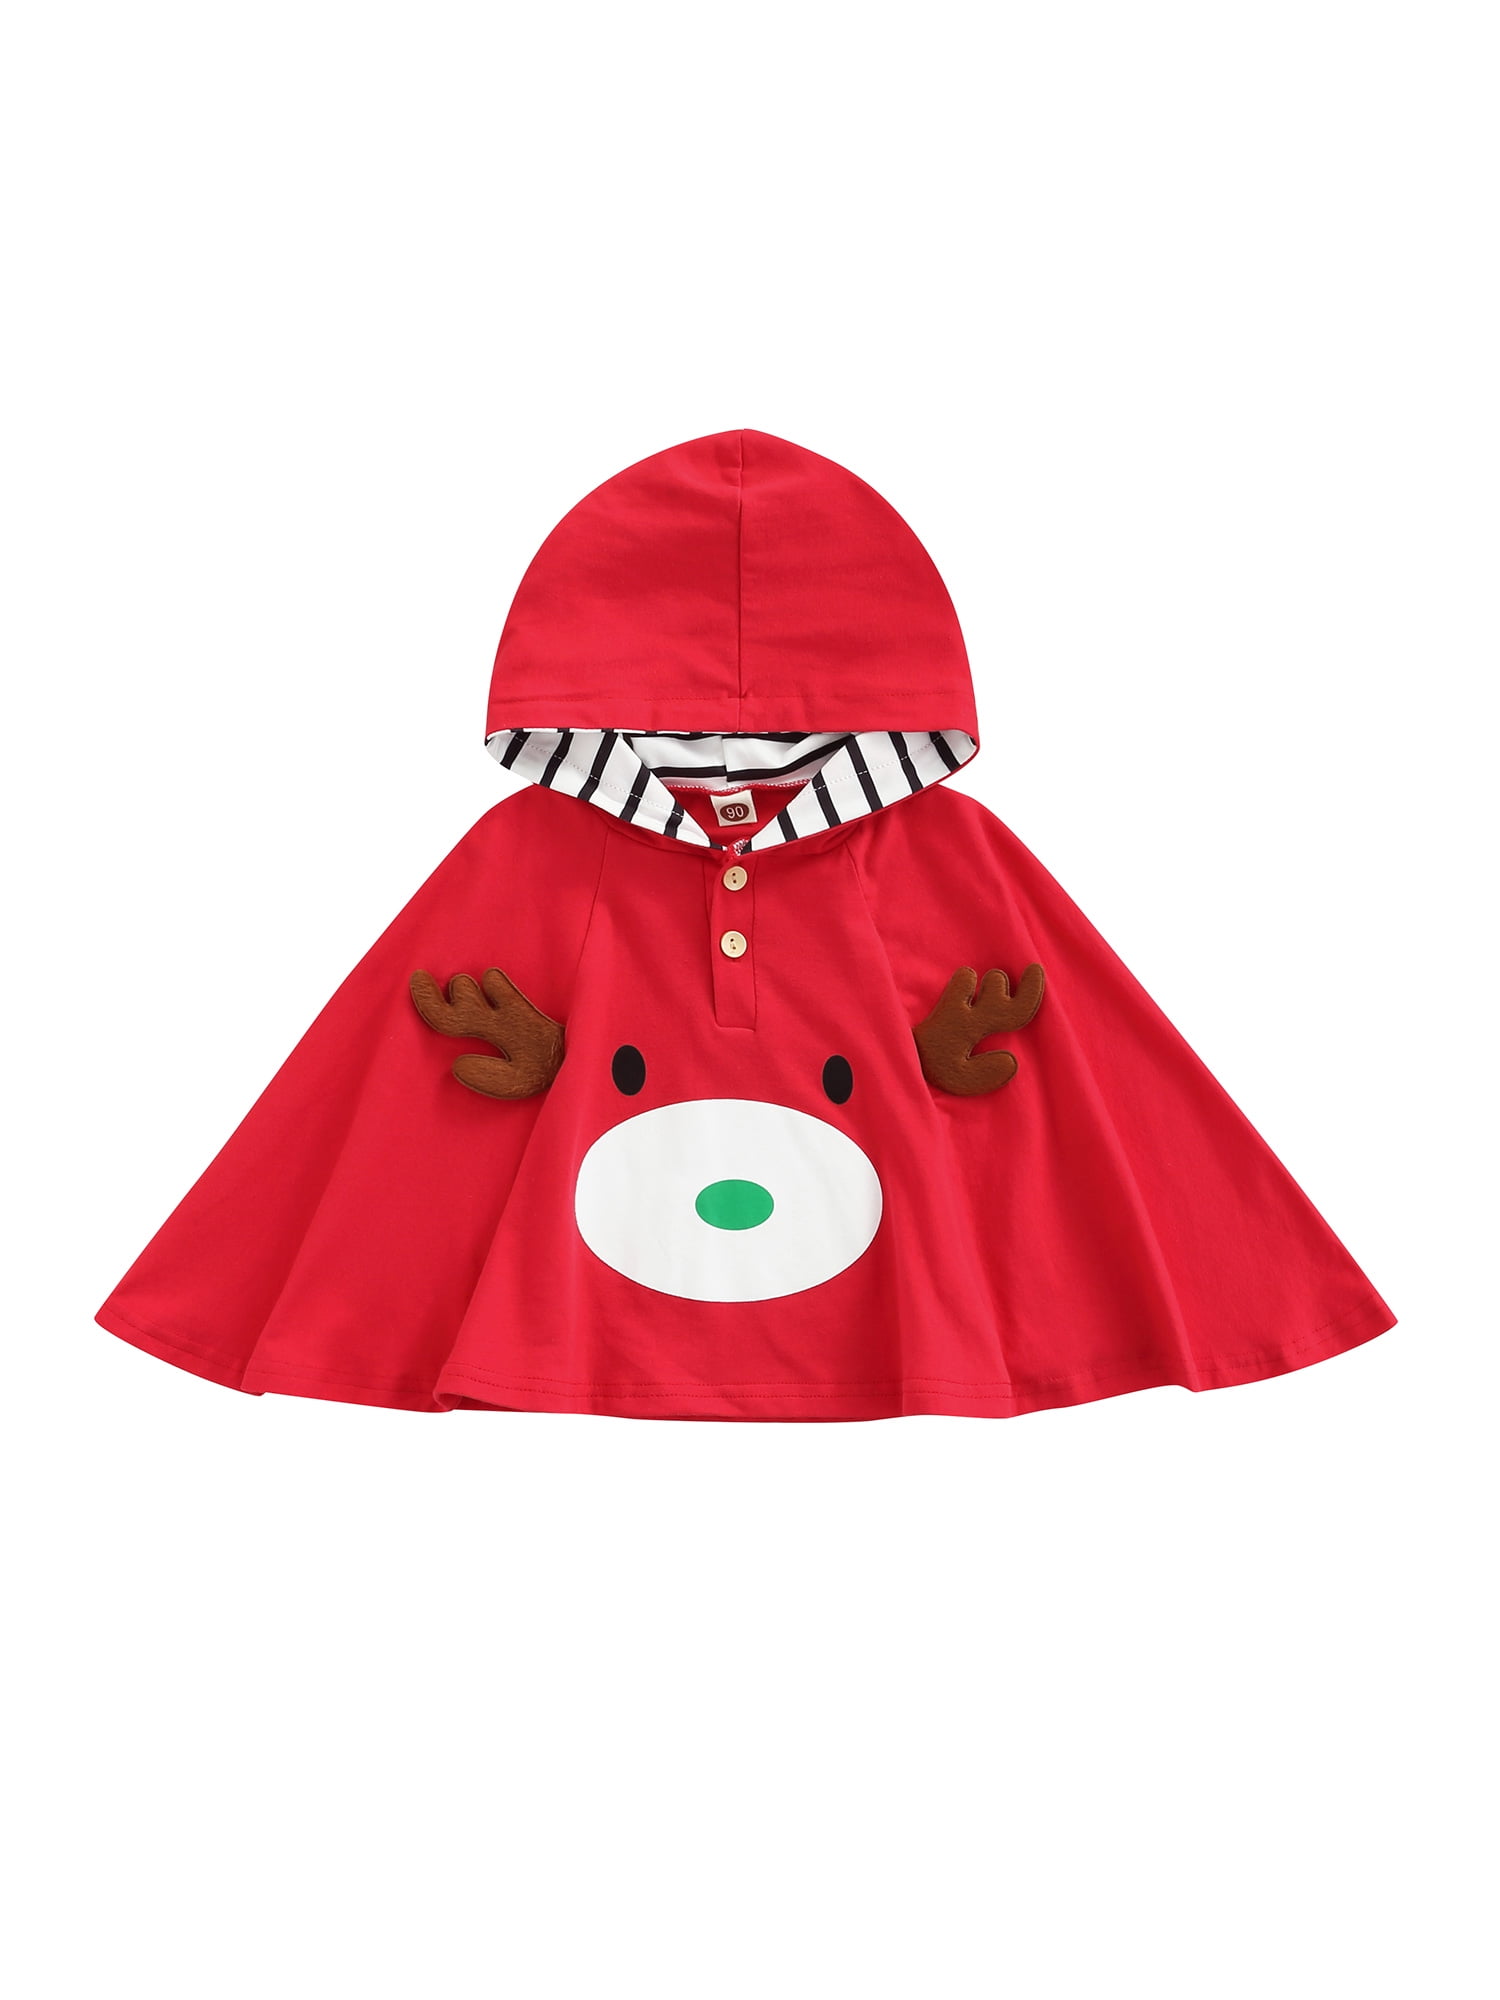 Bebiullo Princess Cloak with Hood Girls Boys Cape Kid Toddler Costume ...